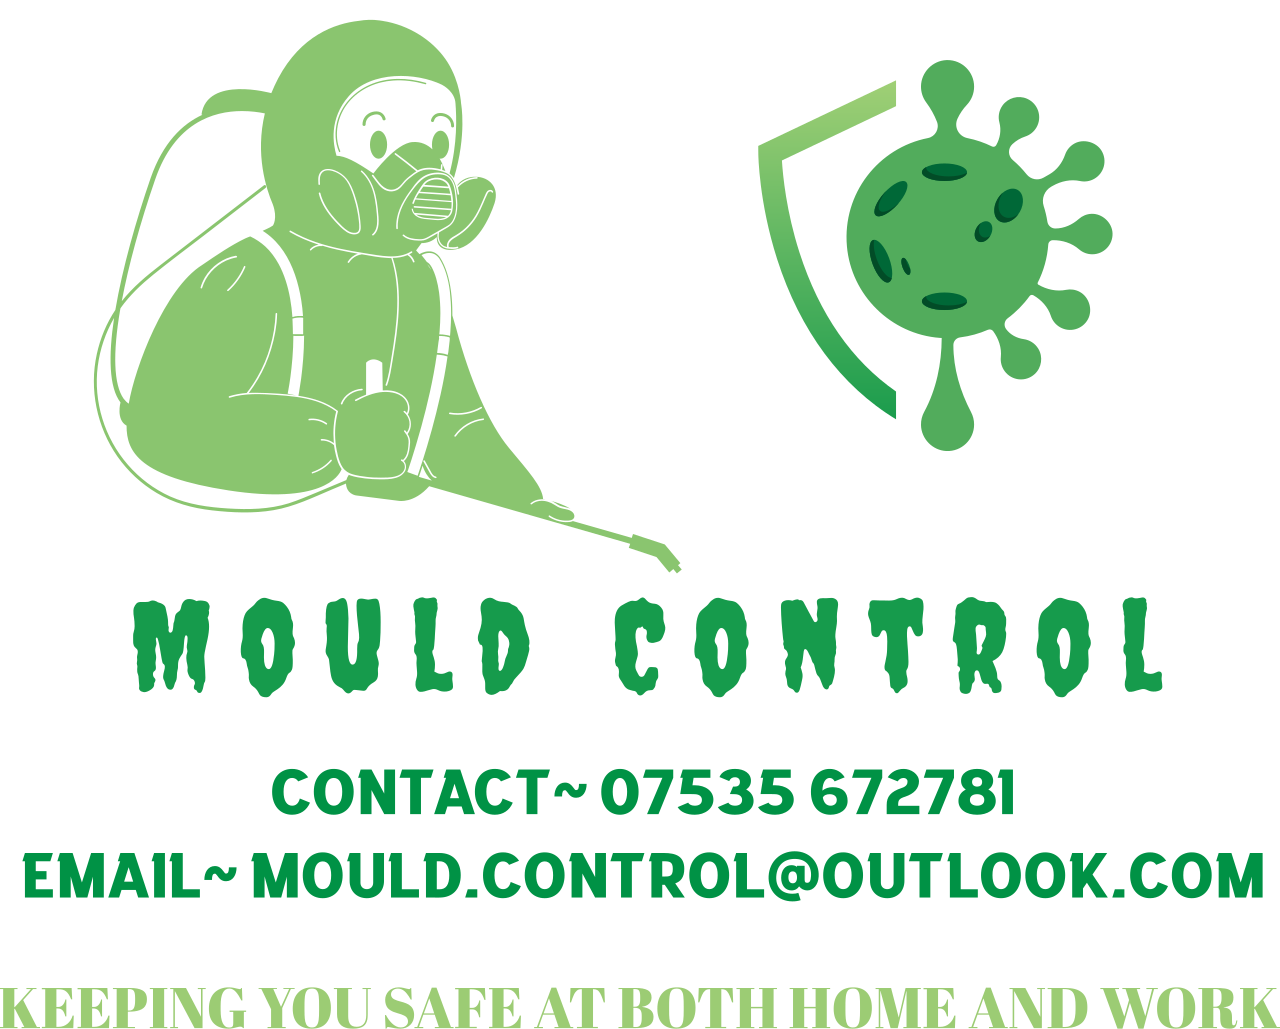 Mould Control's logo